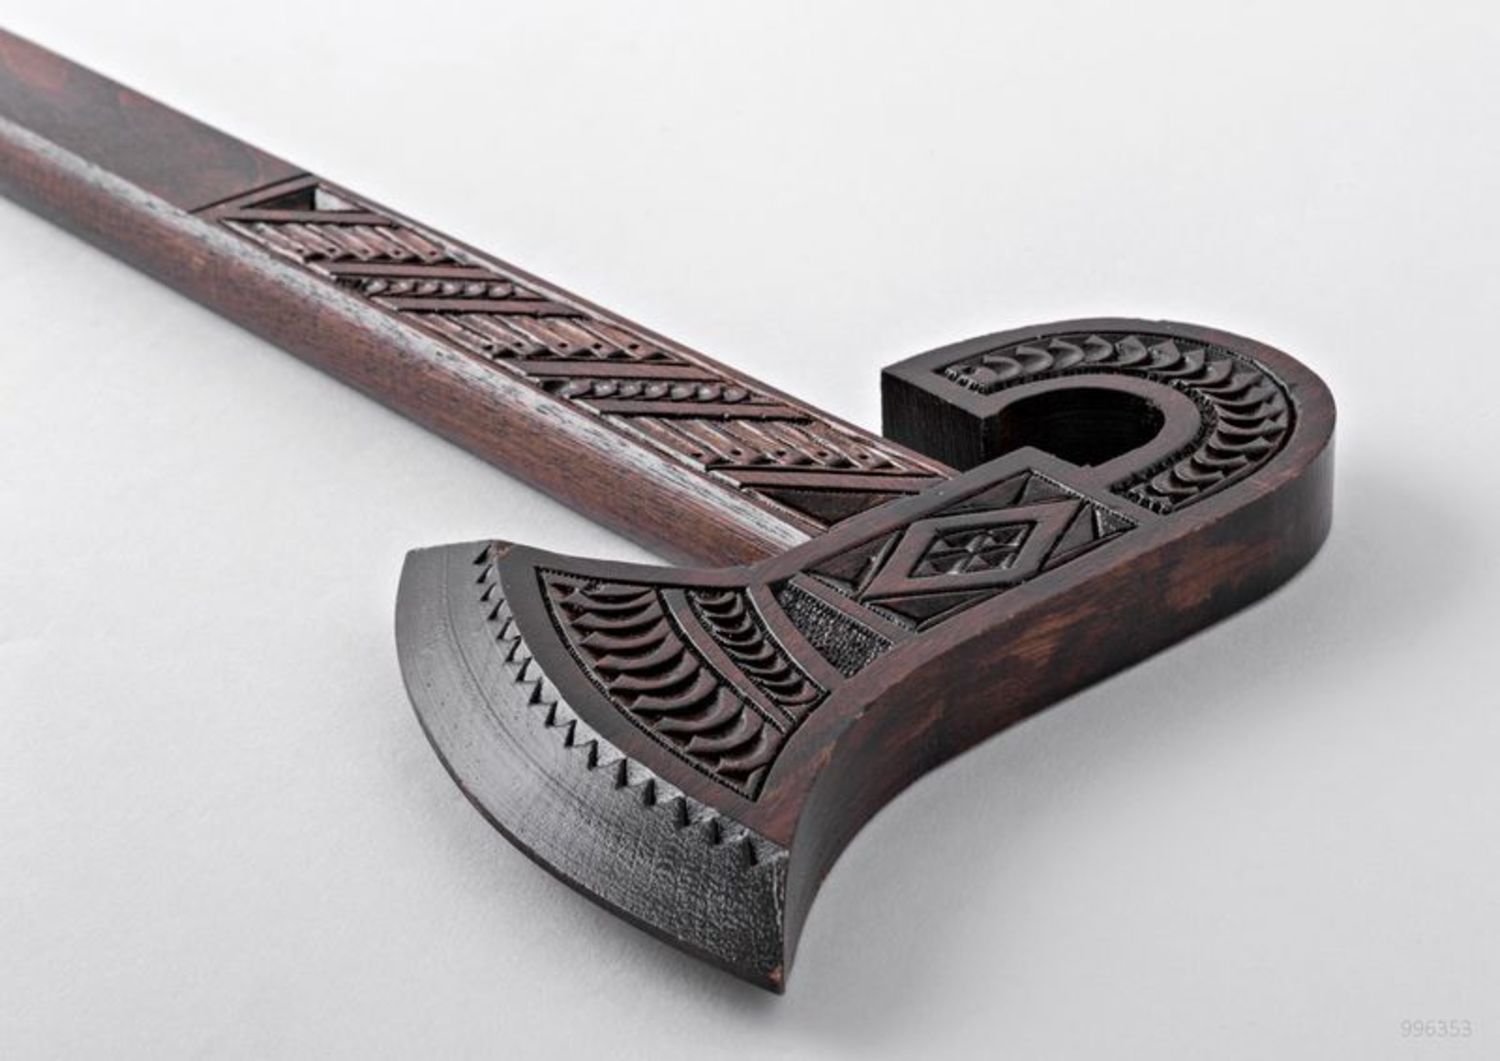 Decorative wooden axe photo 1